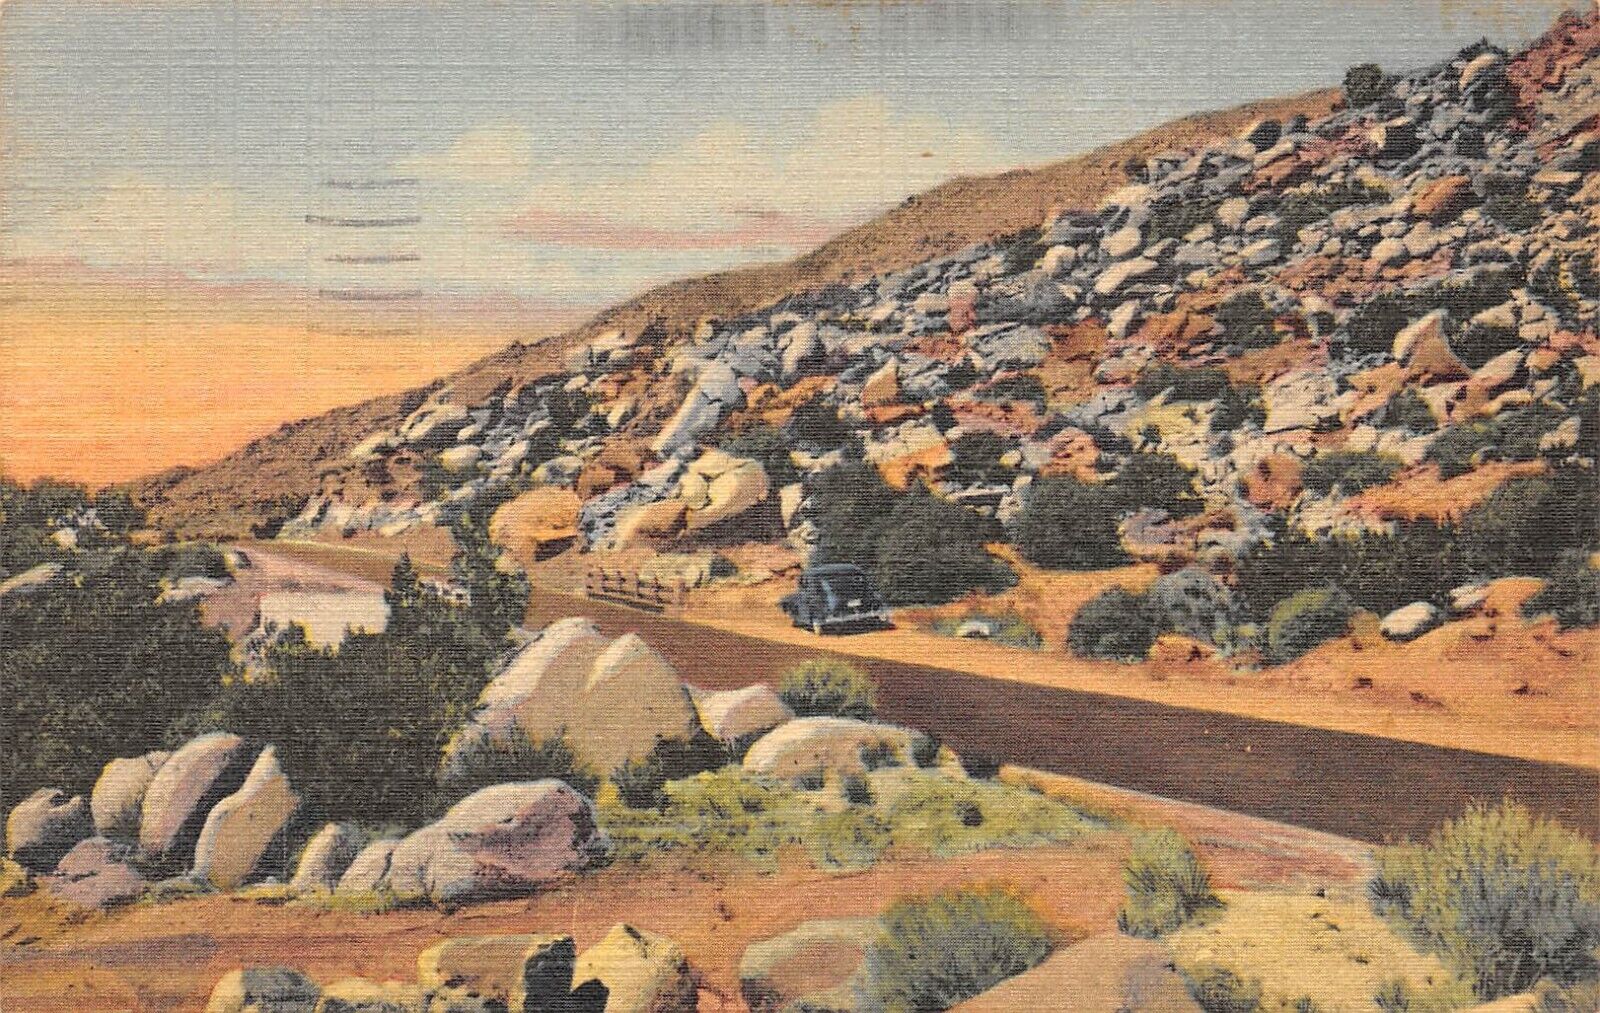 Scene in Tijeras Canyon Highway 66 East of Albuquerque NM 1940 Postcard 4288